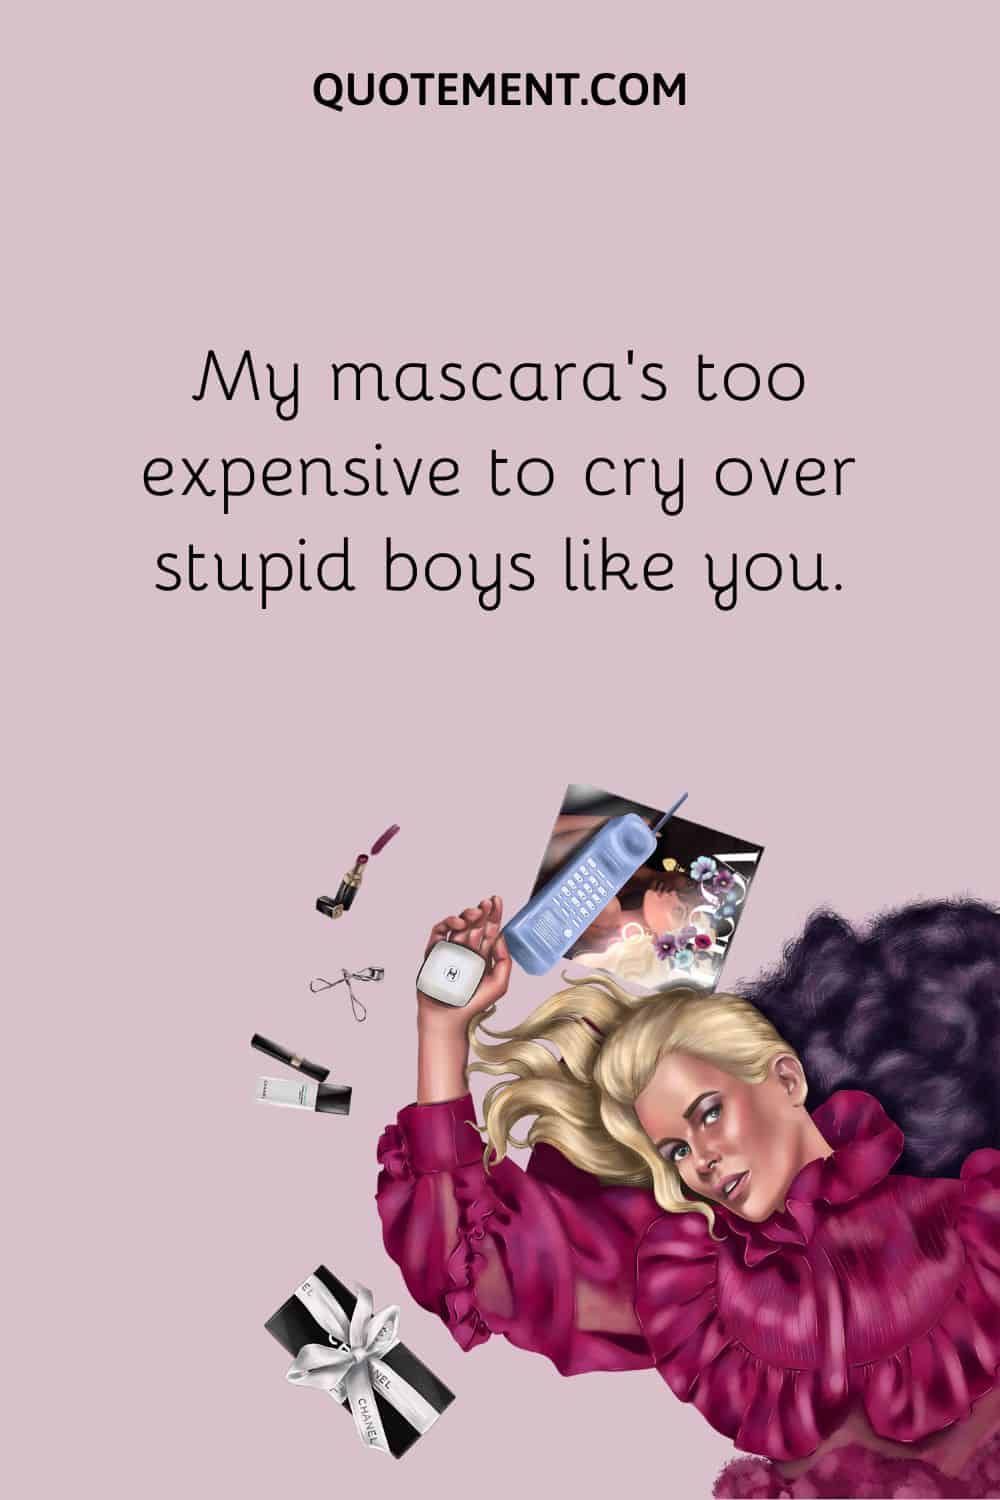 My mascara’s too expensive to cry over stupid boys like you